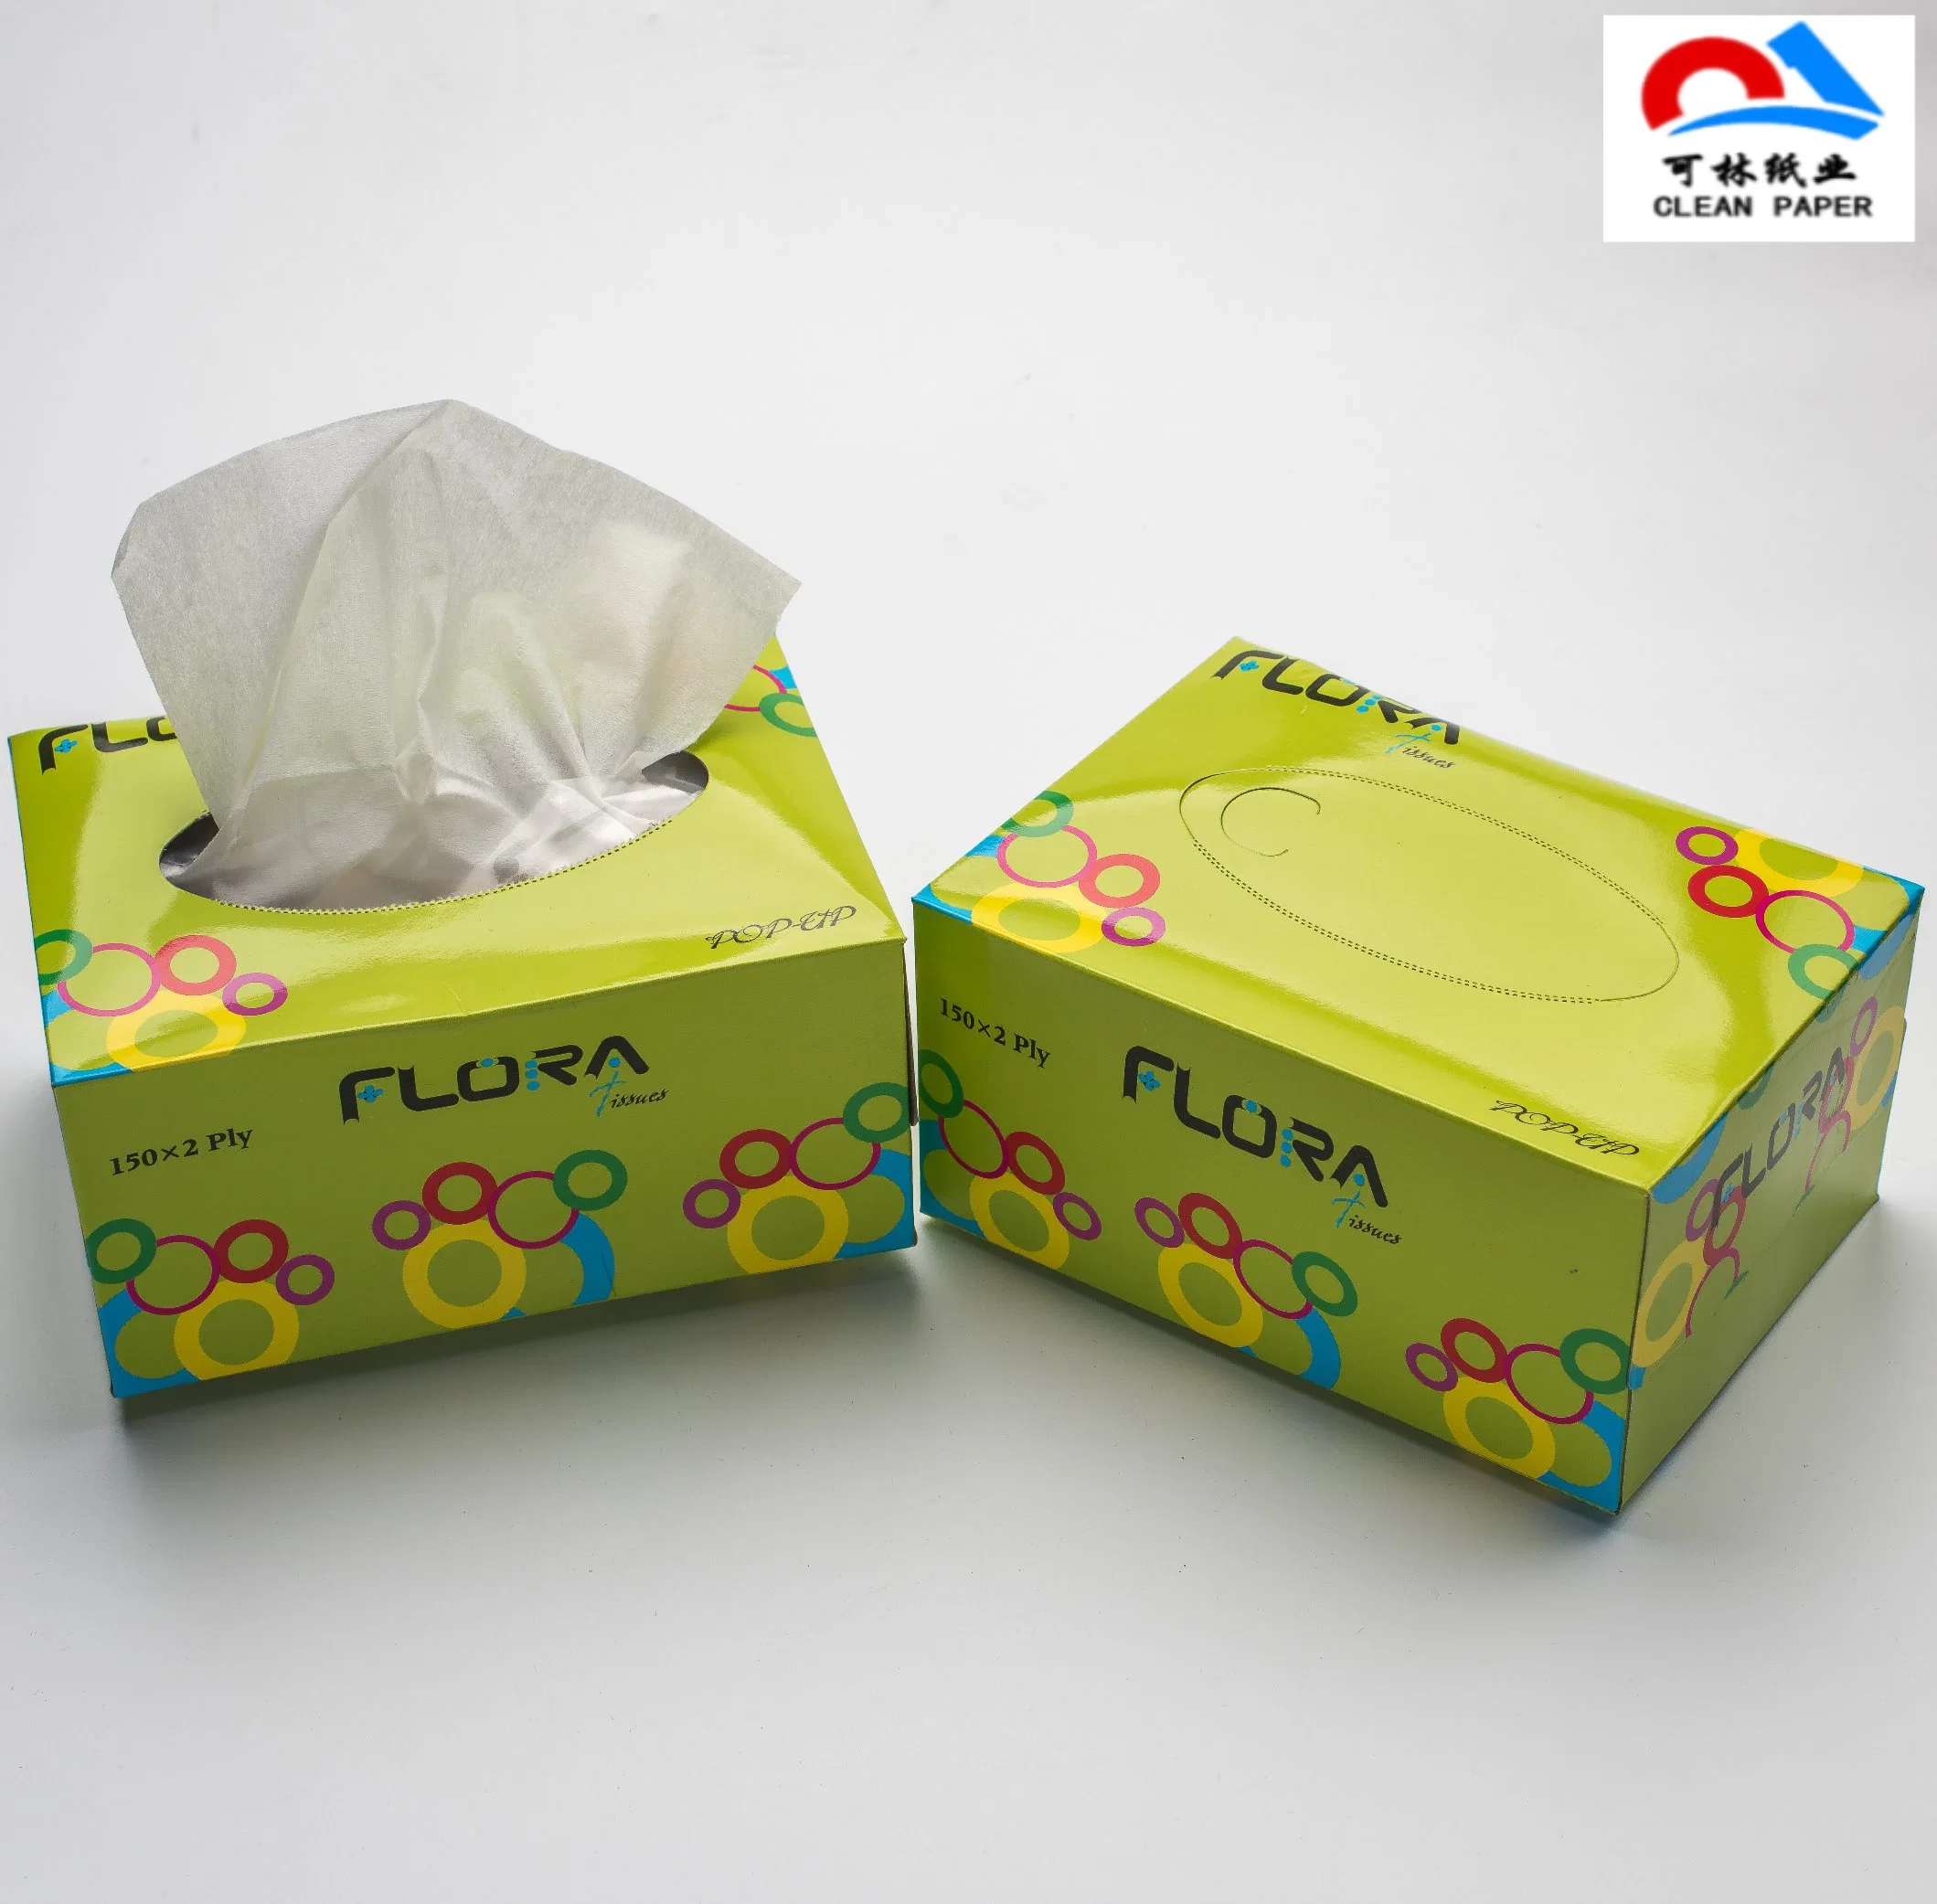 Soft Pack Facial Tissue Serviette of OEM